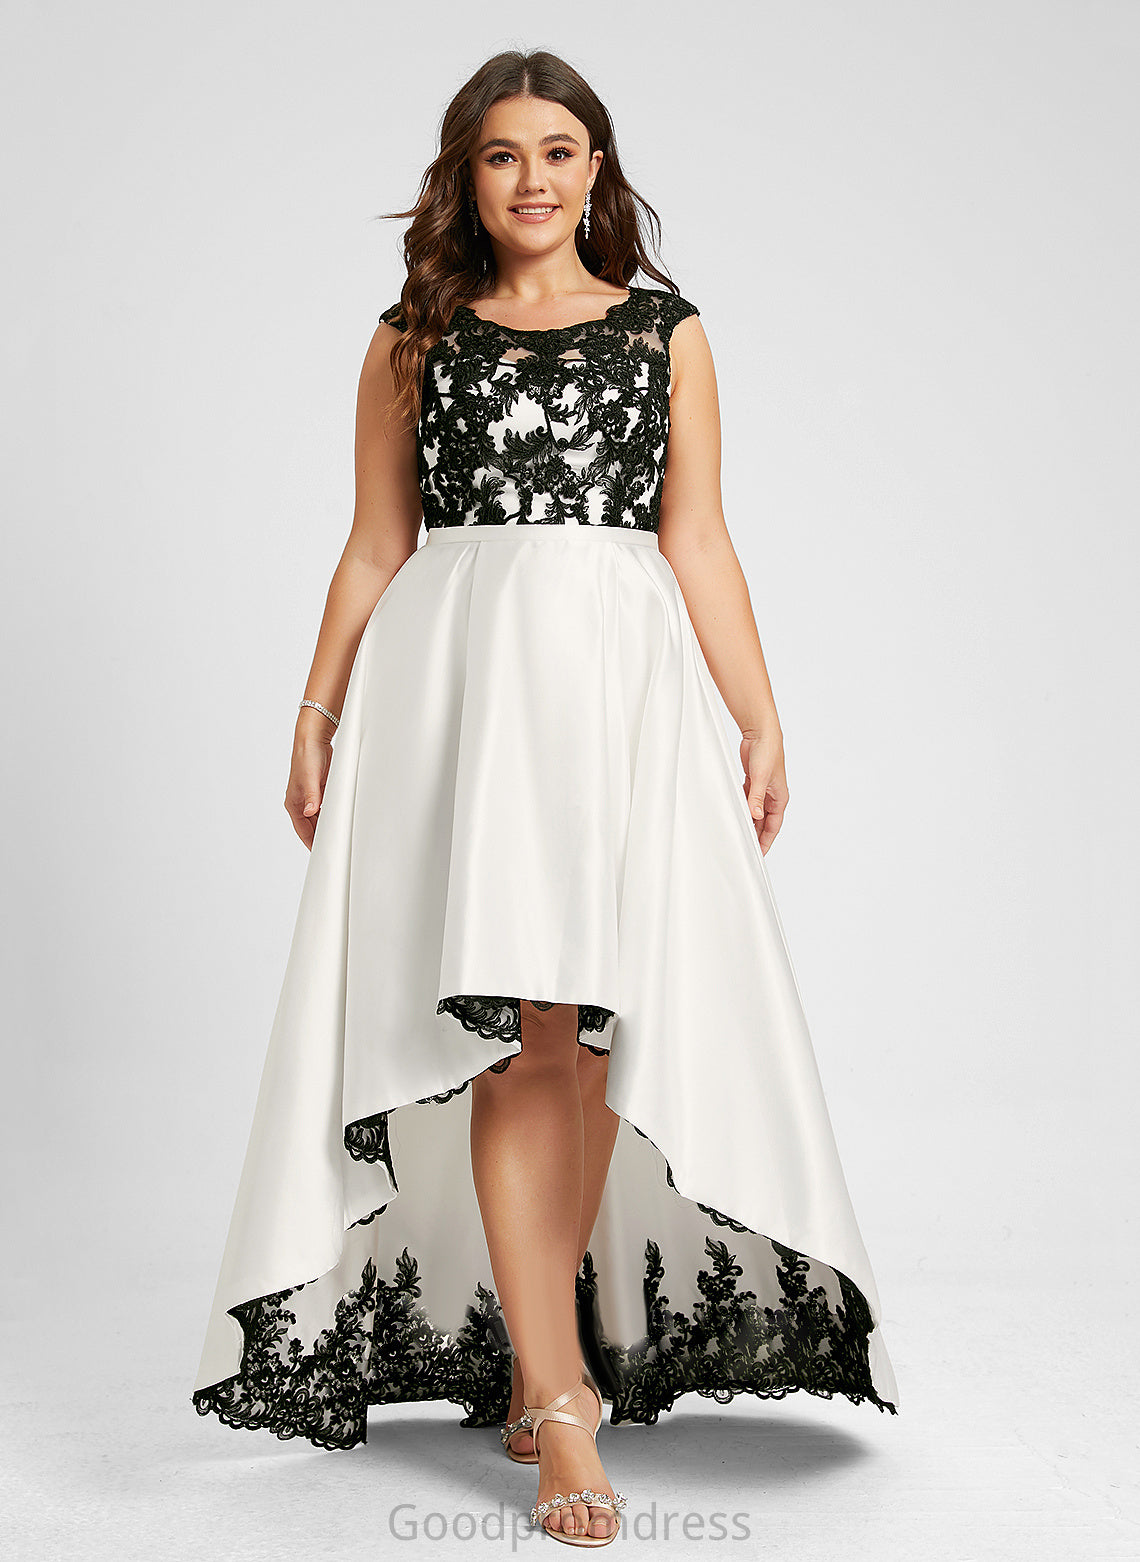 Dress Leah Satin Scoop Lace A-Line Illusion Asymmetrical Wedding Dresses Wedding